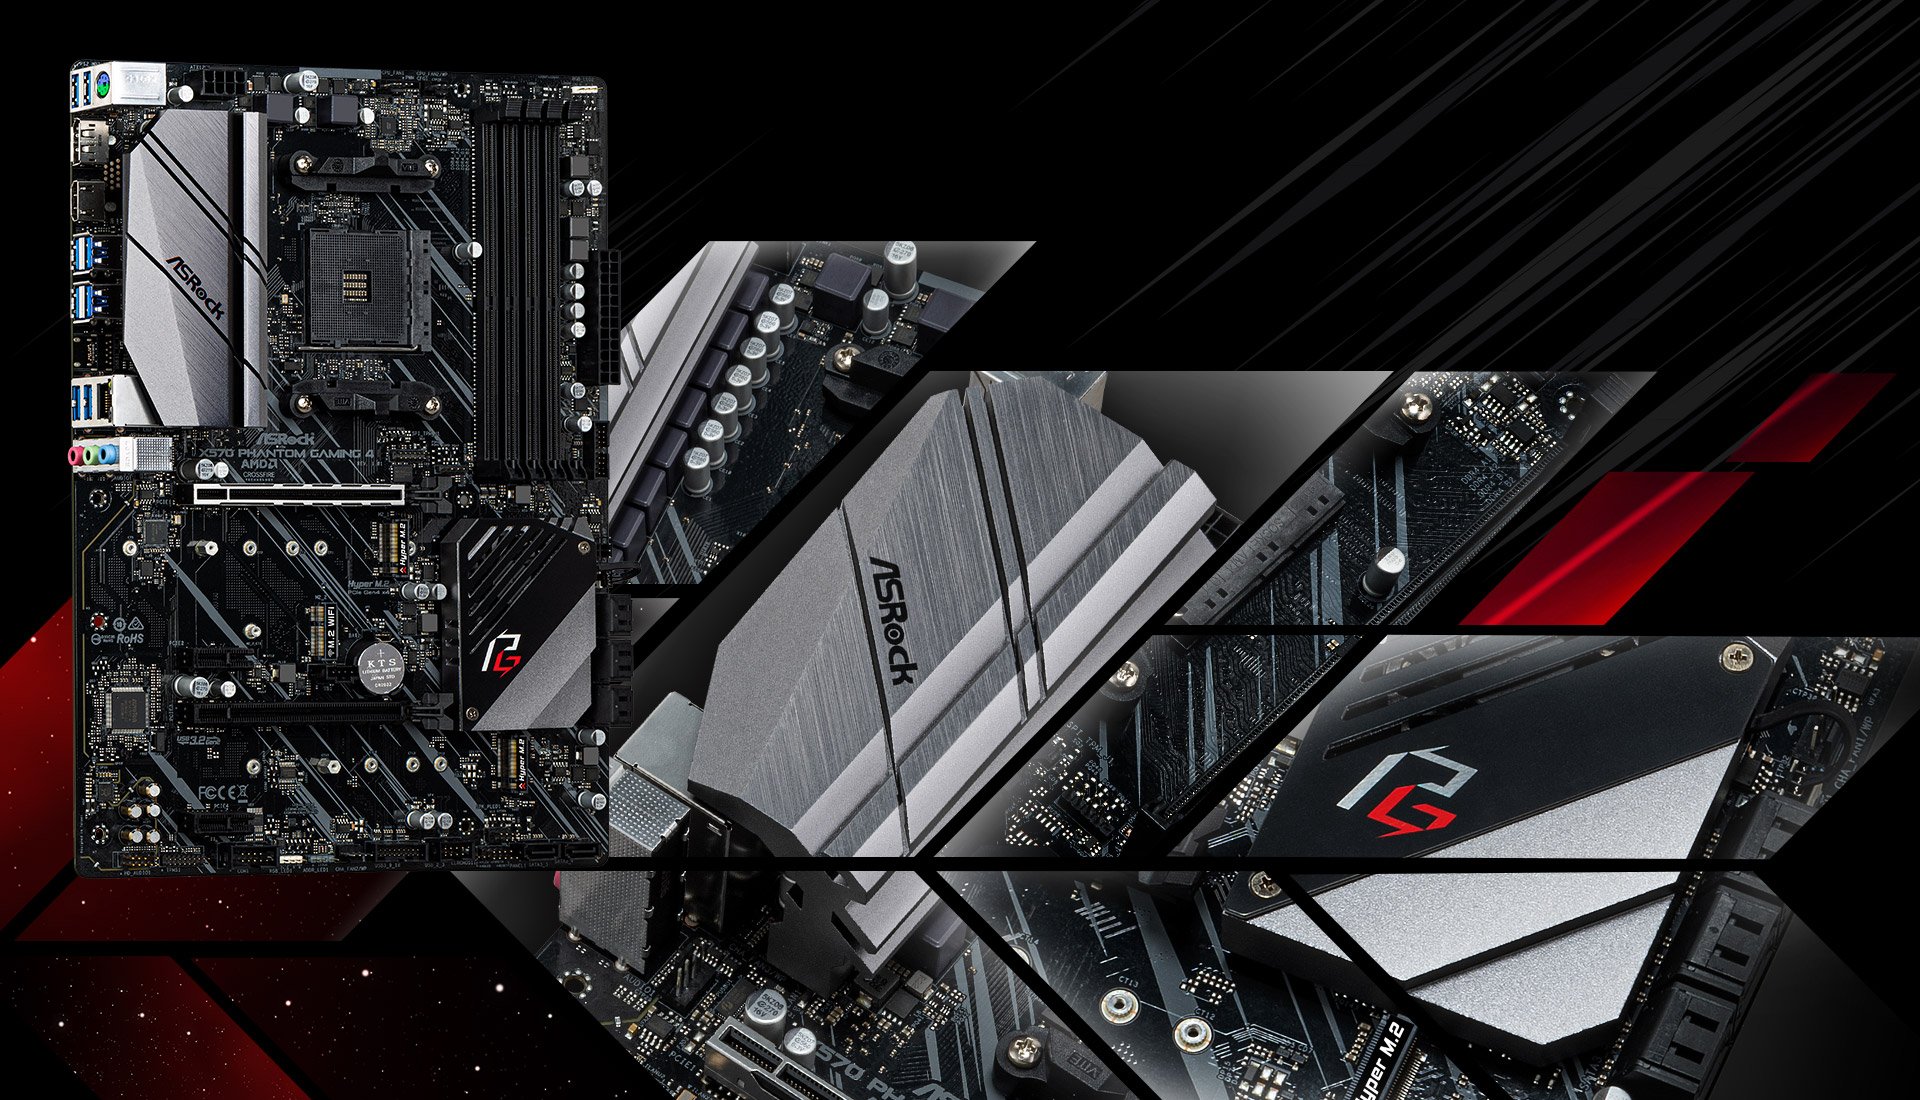 ASRock X570 PHANTOM GAMING 4 ATX AMD Motherboard - Newegg.com